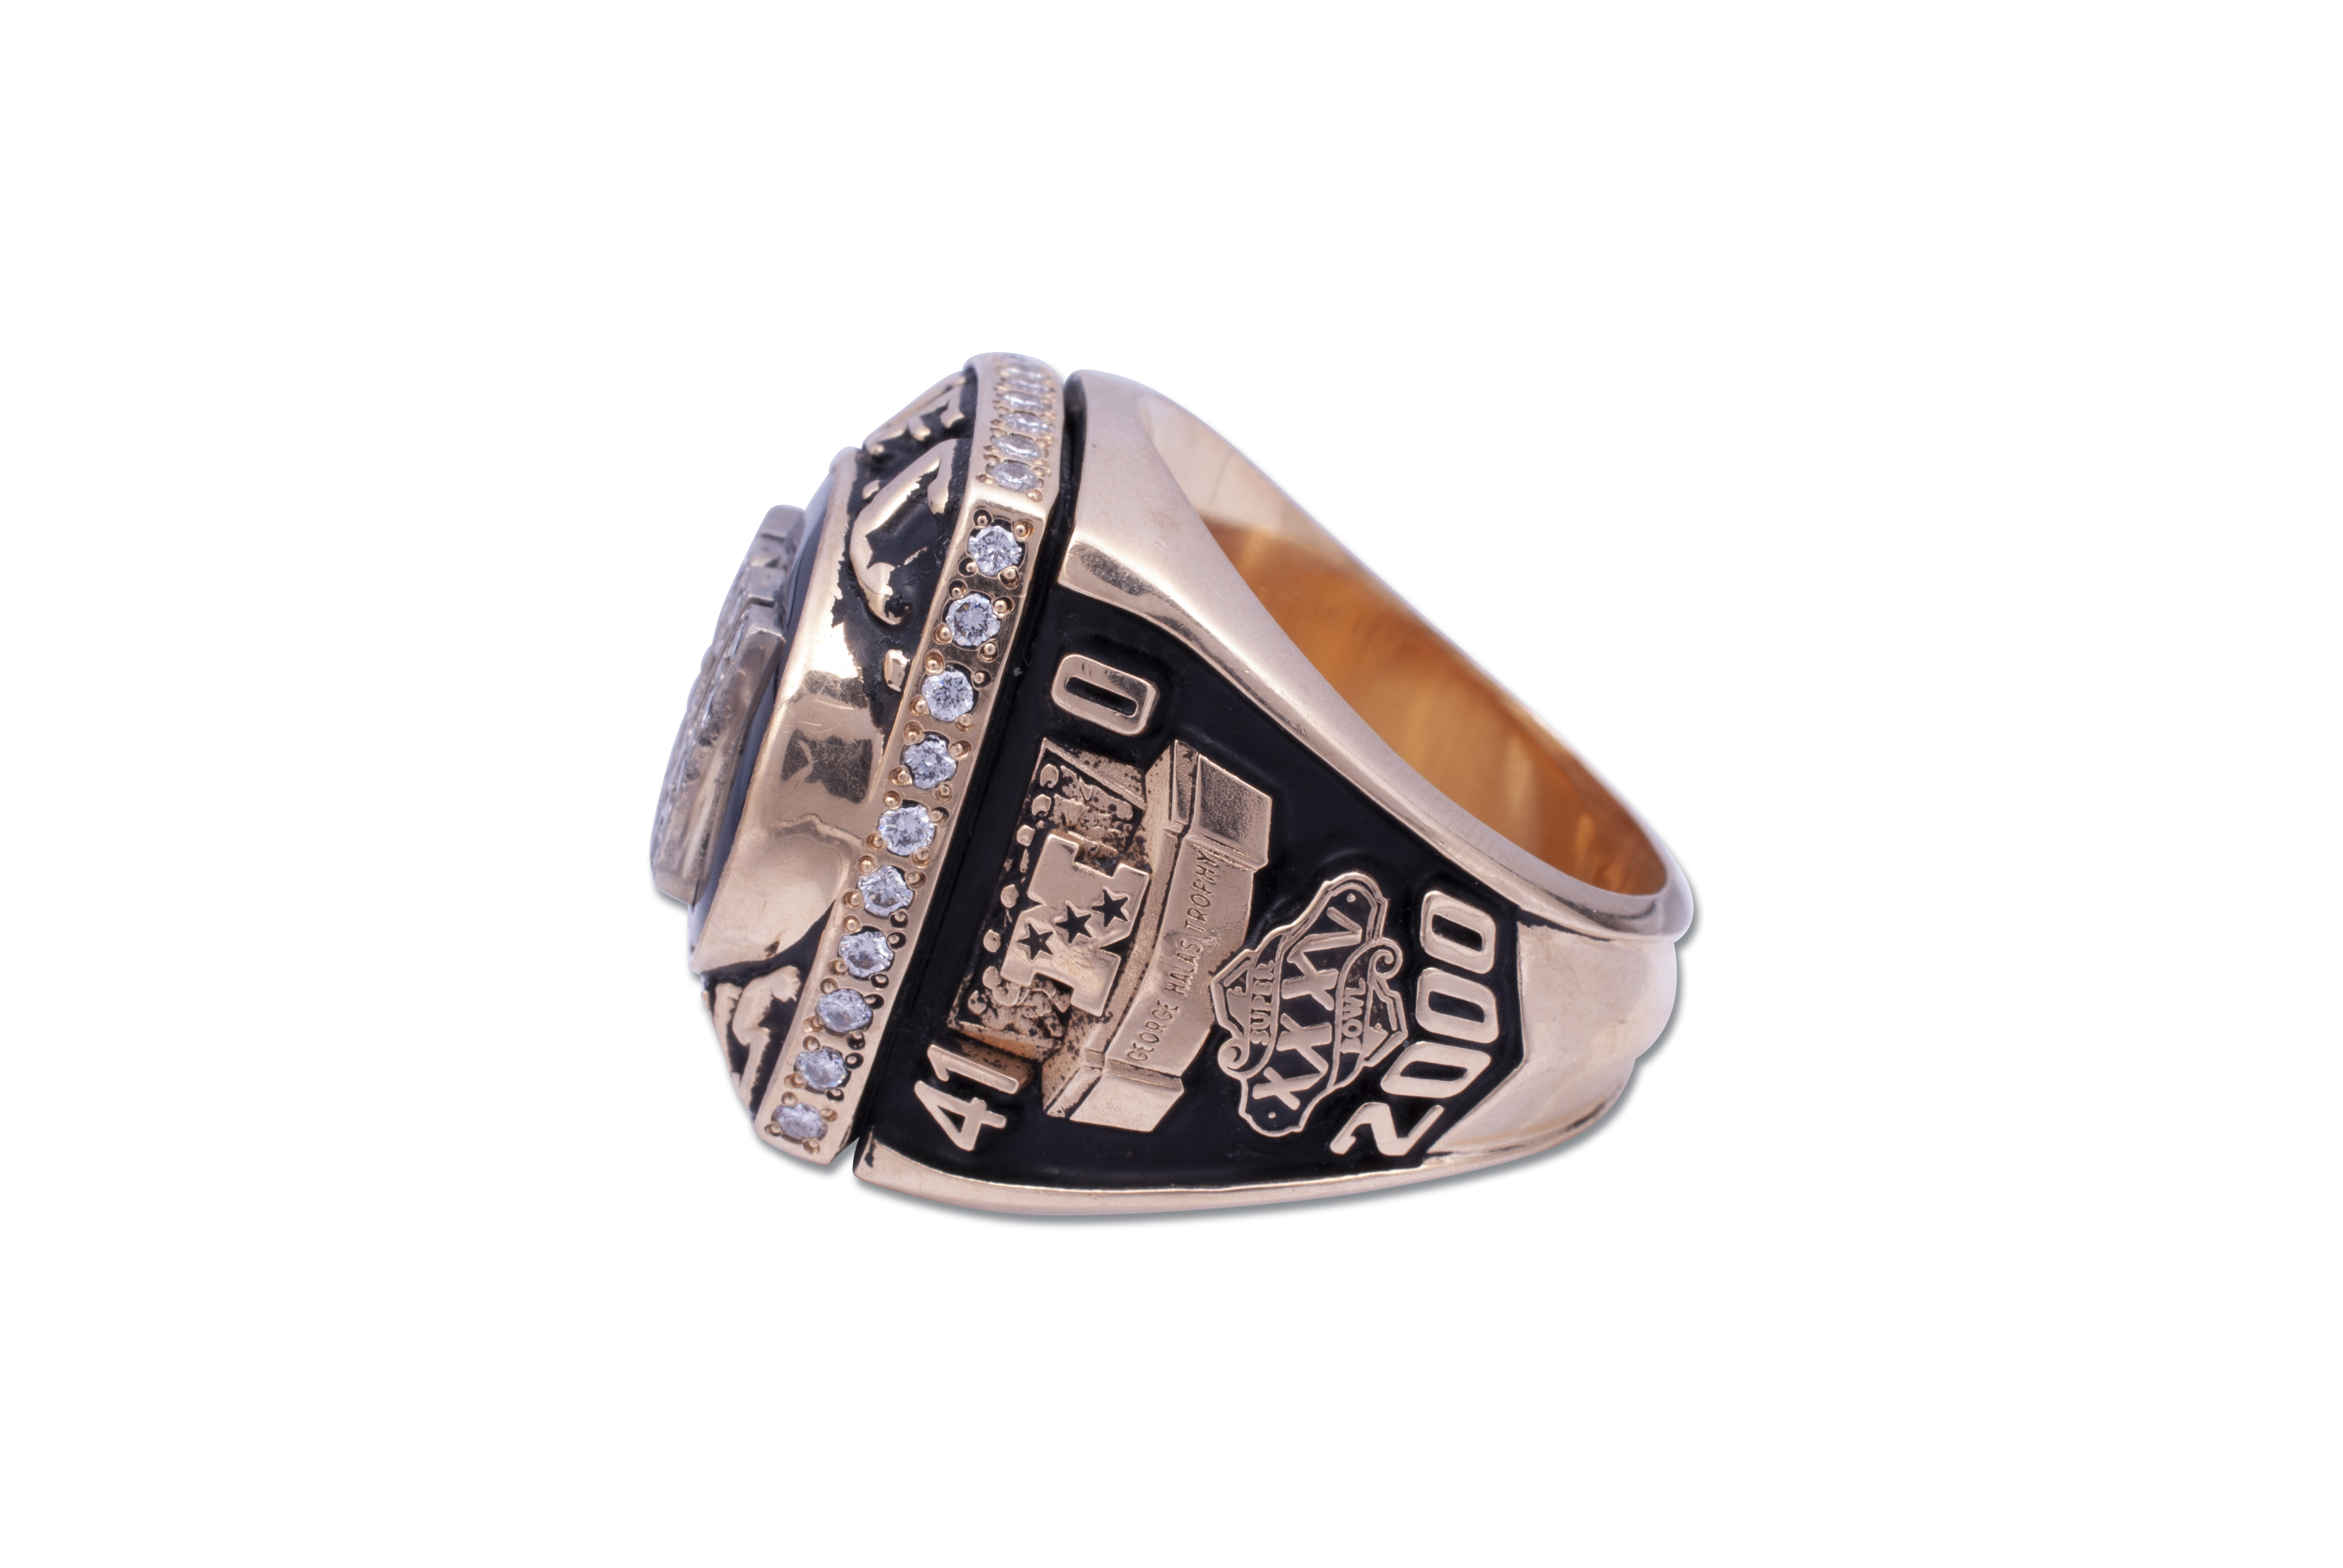 2000 NFC World Champions Vintage Rare & Collectible High-Quality Replica Gold Football Championship Ring with Cherrywood Display Box New York Giants Ramos McDonald 